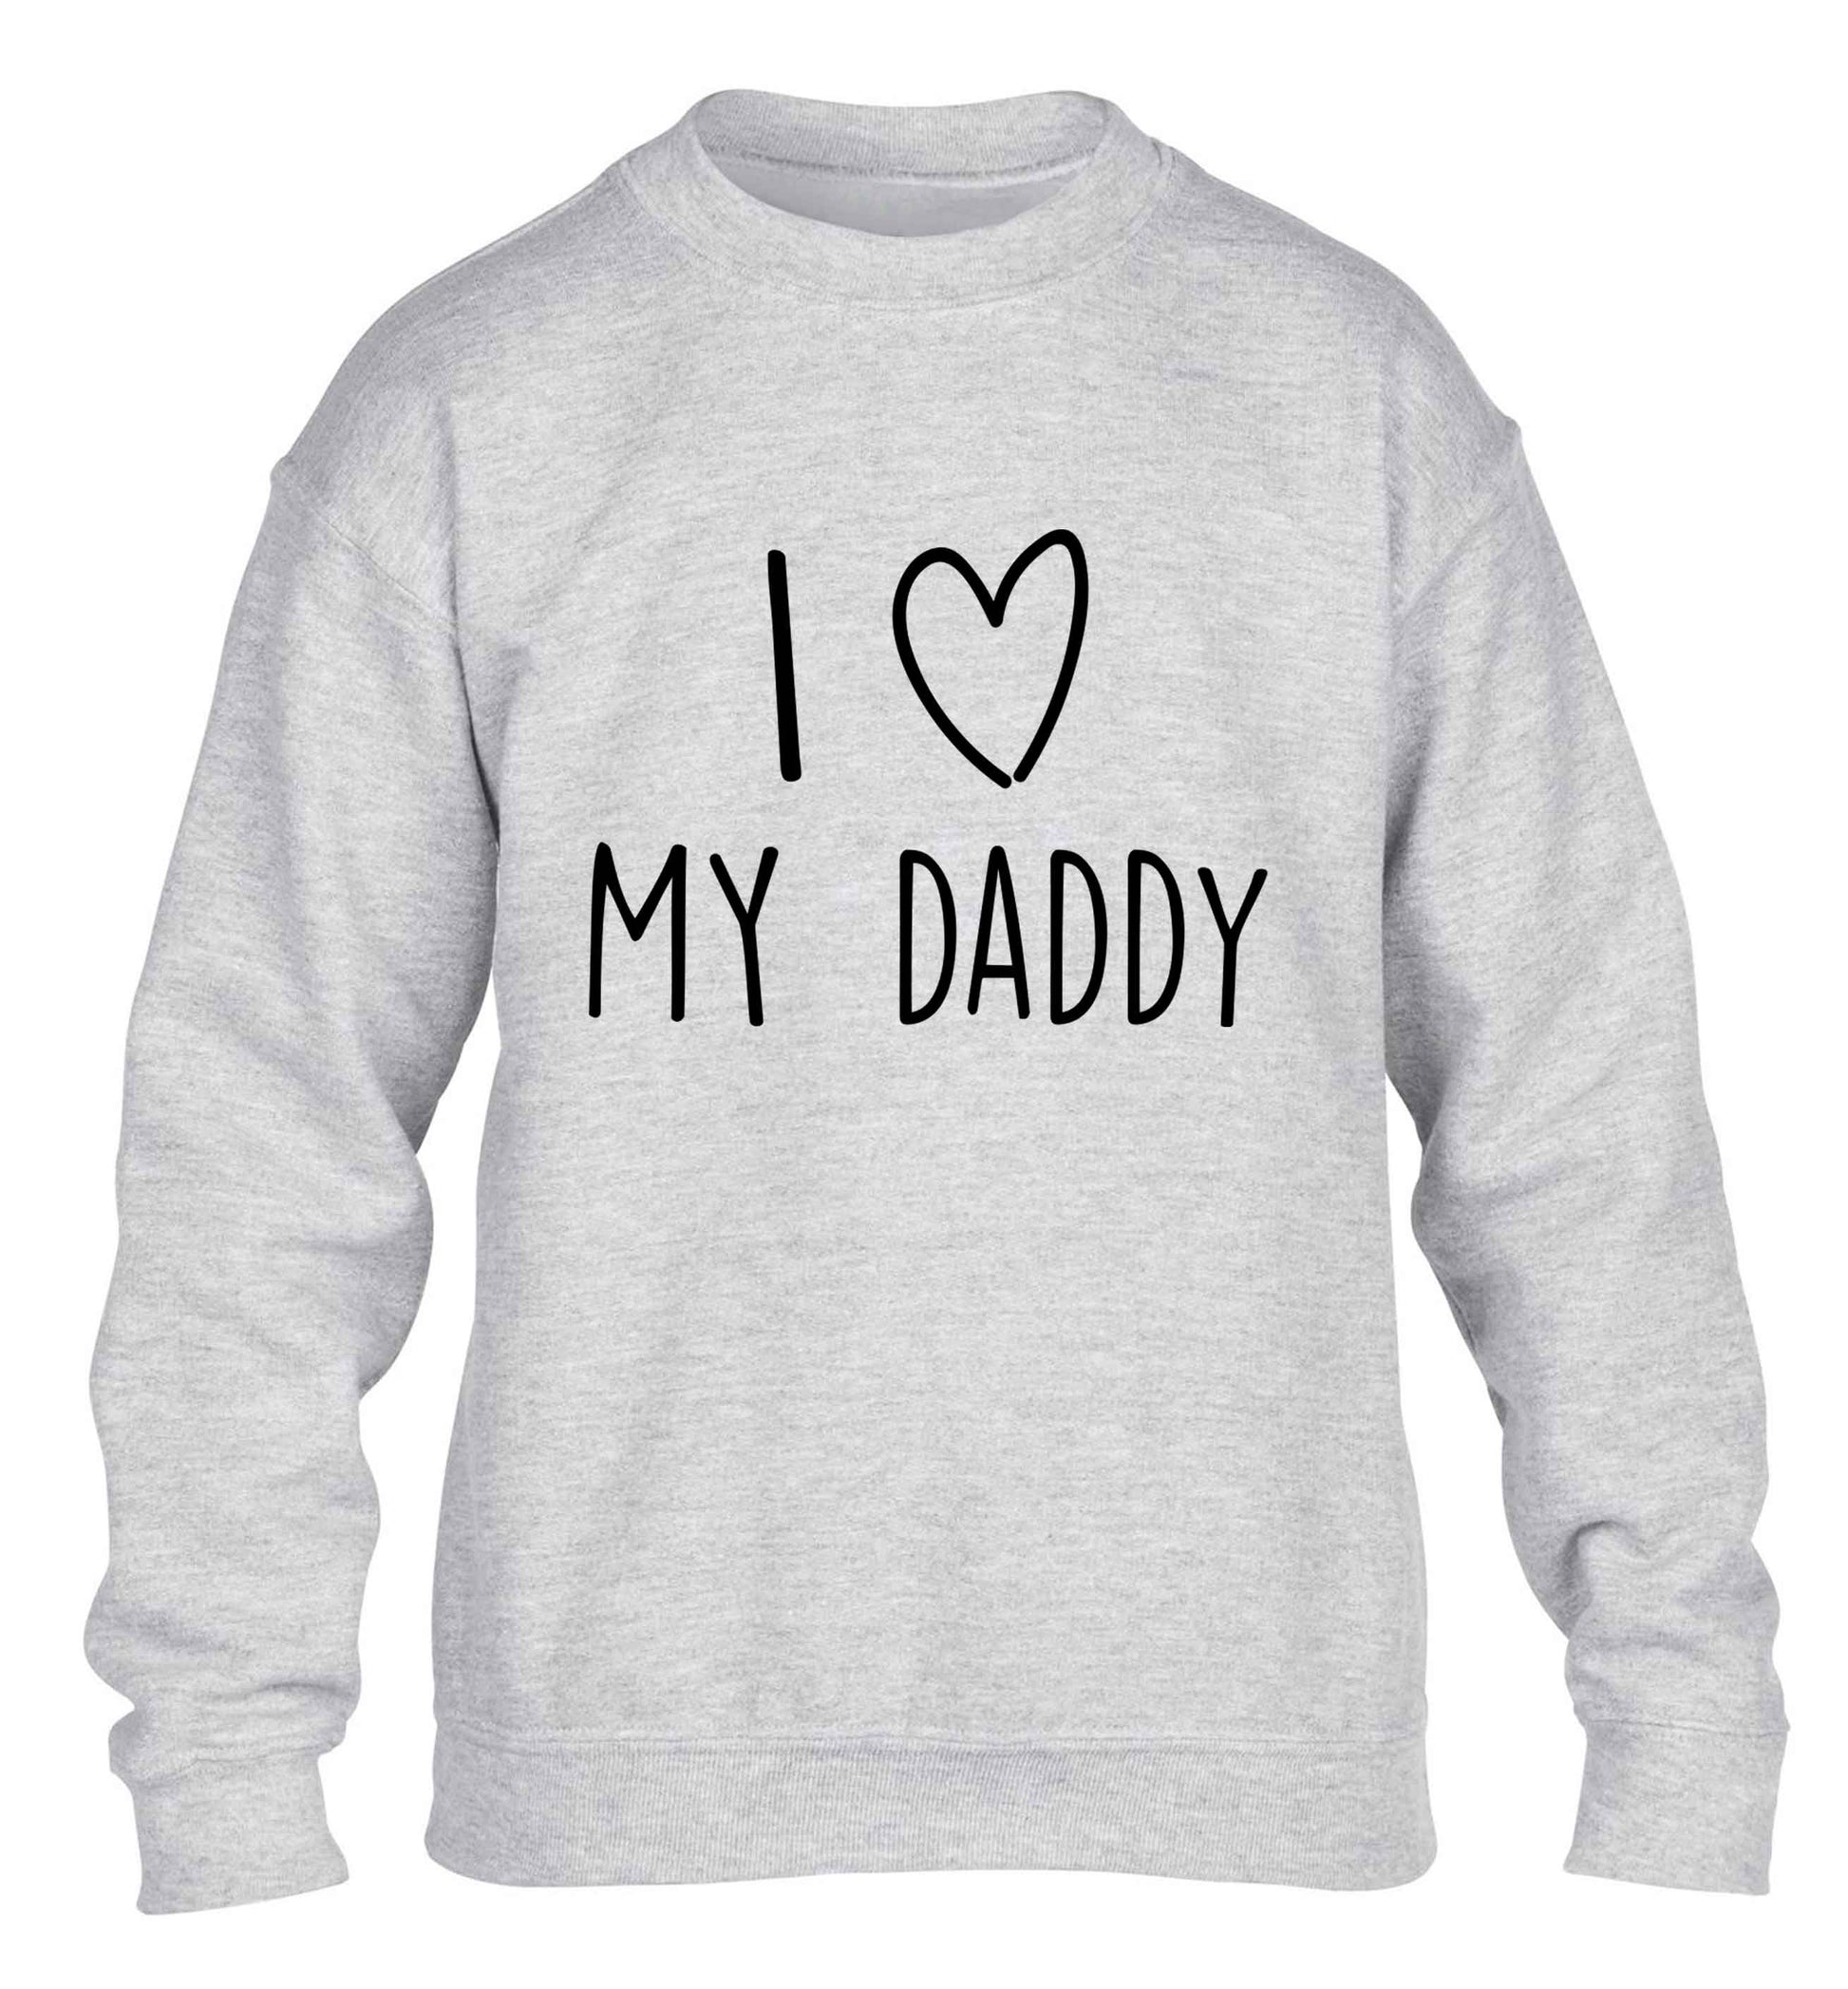 I love my daddy children's grey sweater 12-13 Years